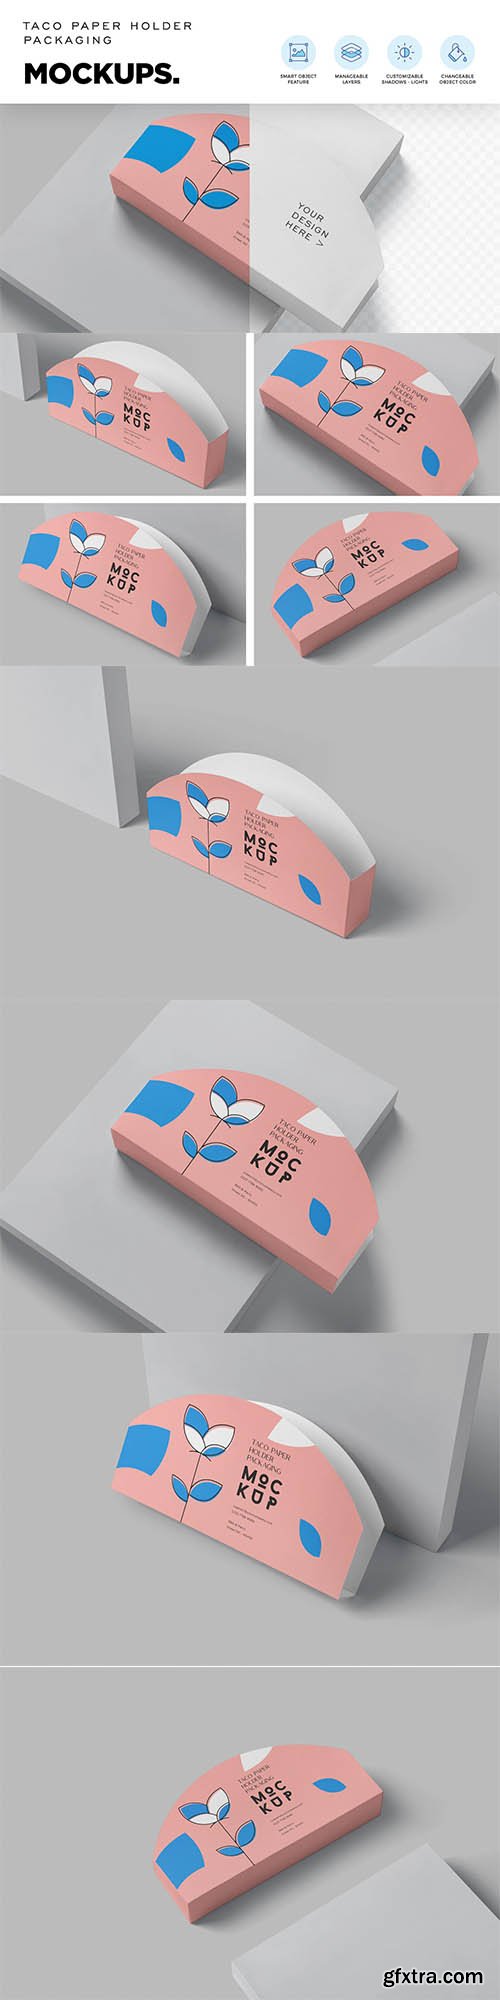 CreativeMarket - Paper Taco Holder Mockups 6859712